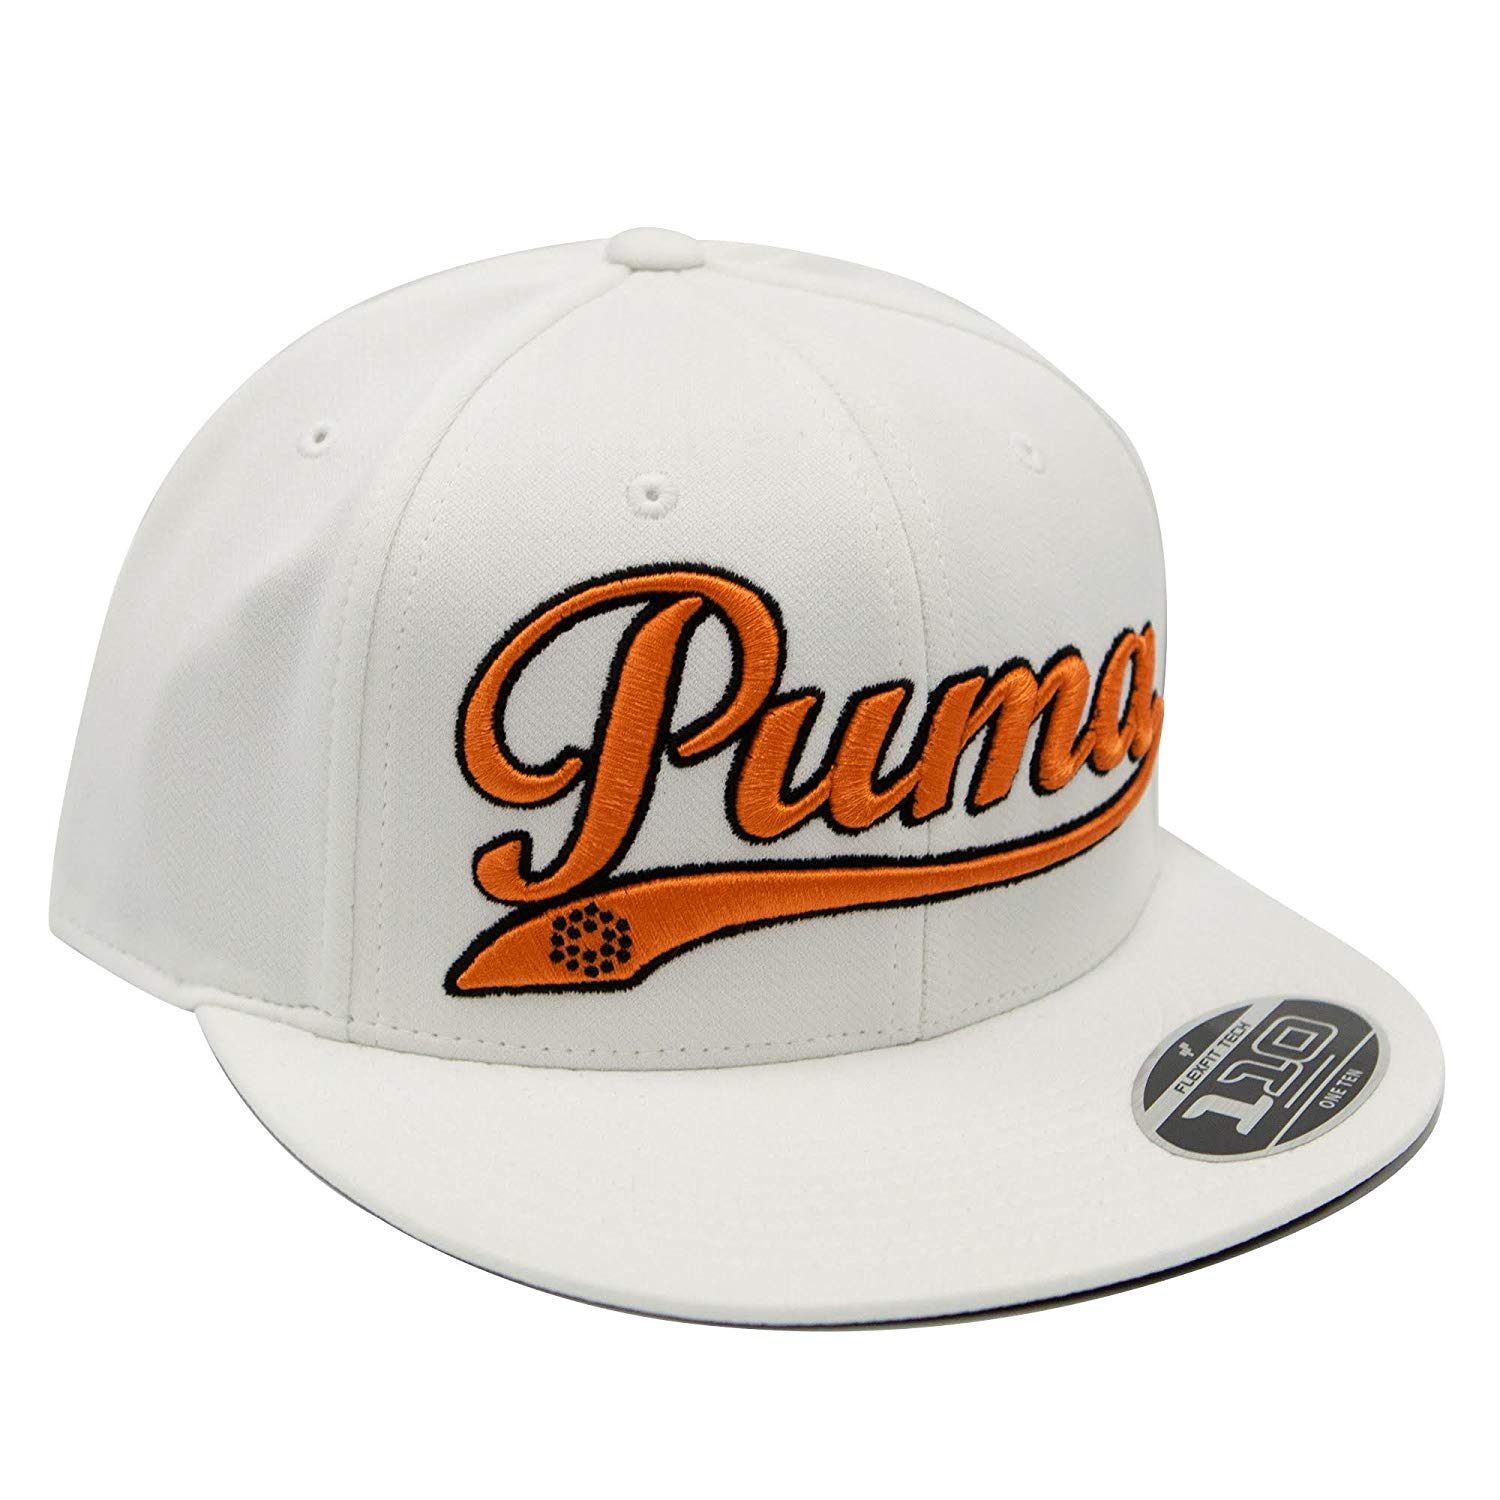 Cool Puma Logo - Amazon.com: PUMA Logo Script Cool Cell Snapback Cap - WHITE: Sports ...